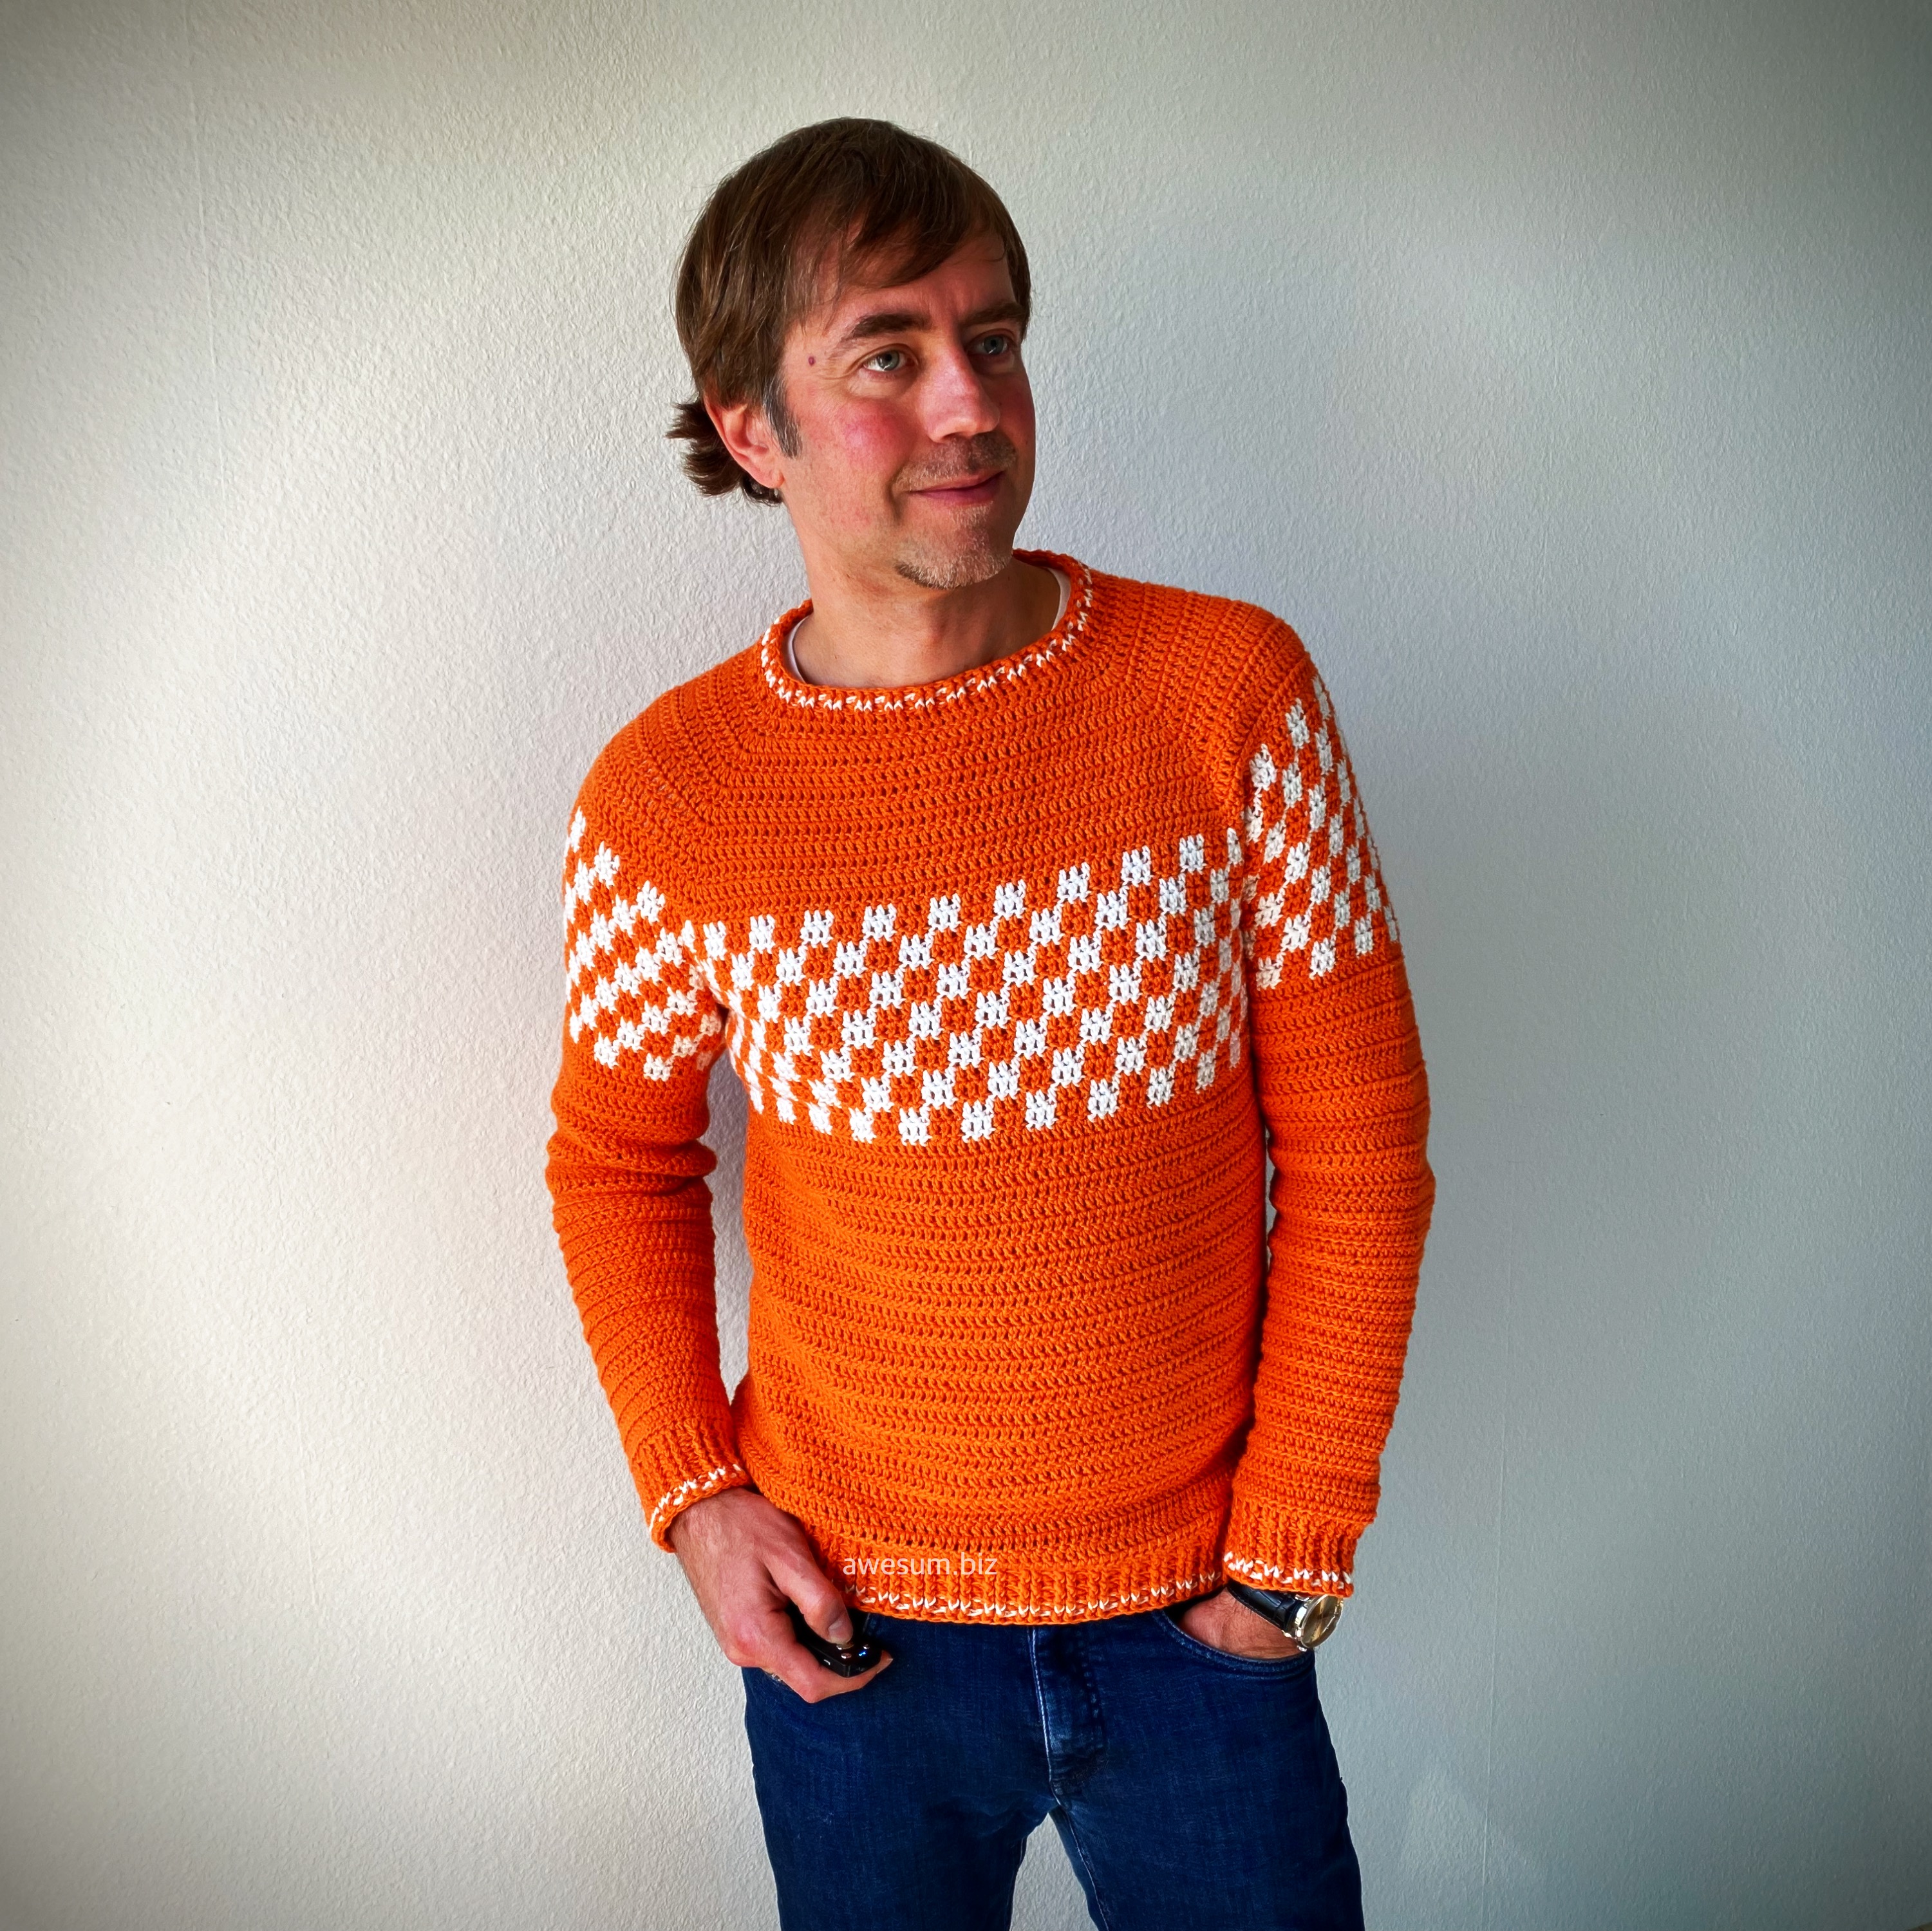 awesum crochet orange men's crochet jersey white checkered with underarm bridges